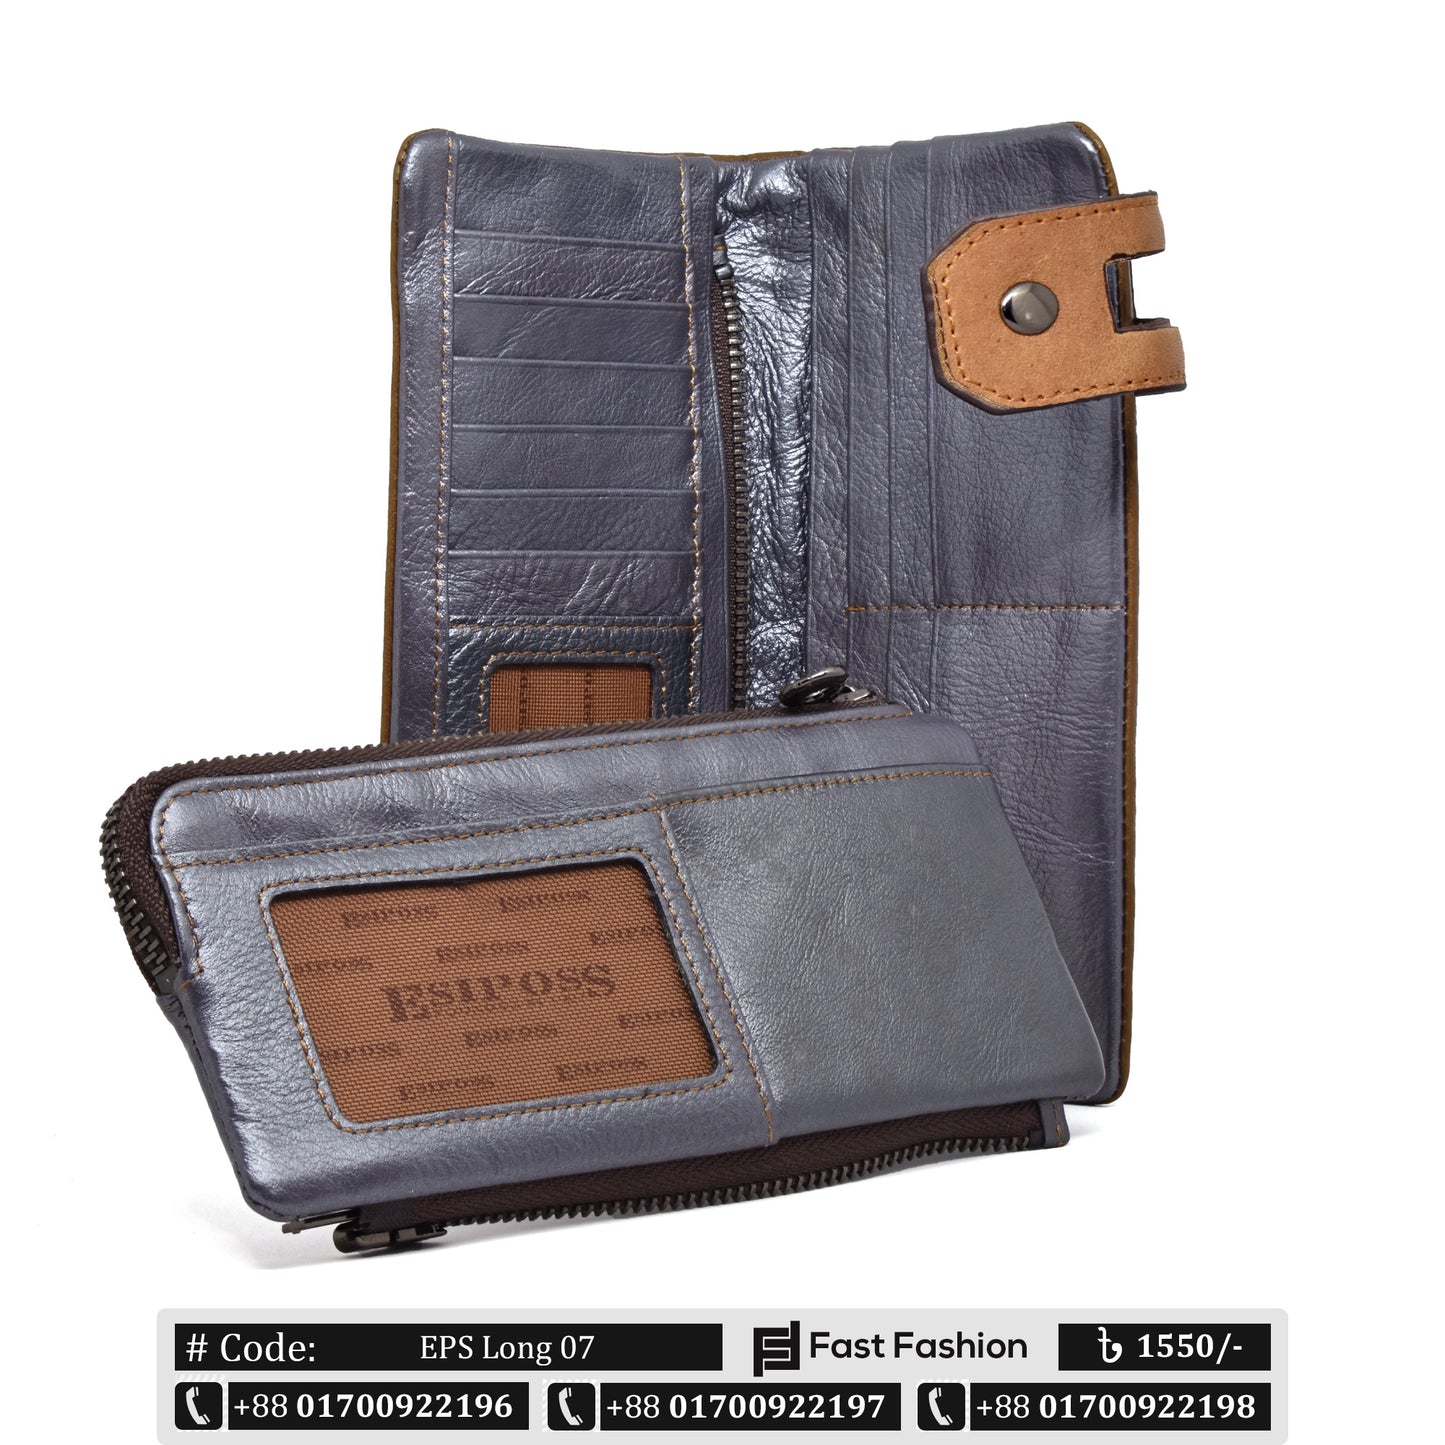 Original Esiposs Leather Long Wallet | Mobile Size Wallet | EPS Long 07